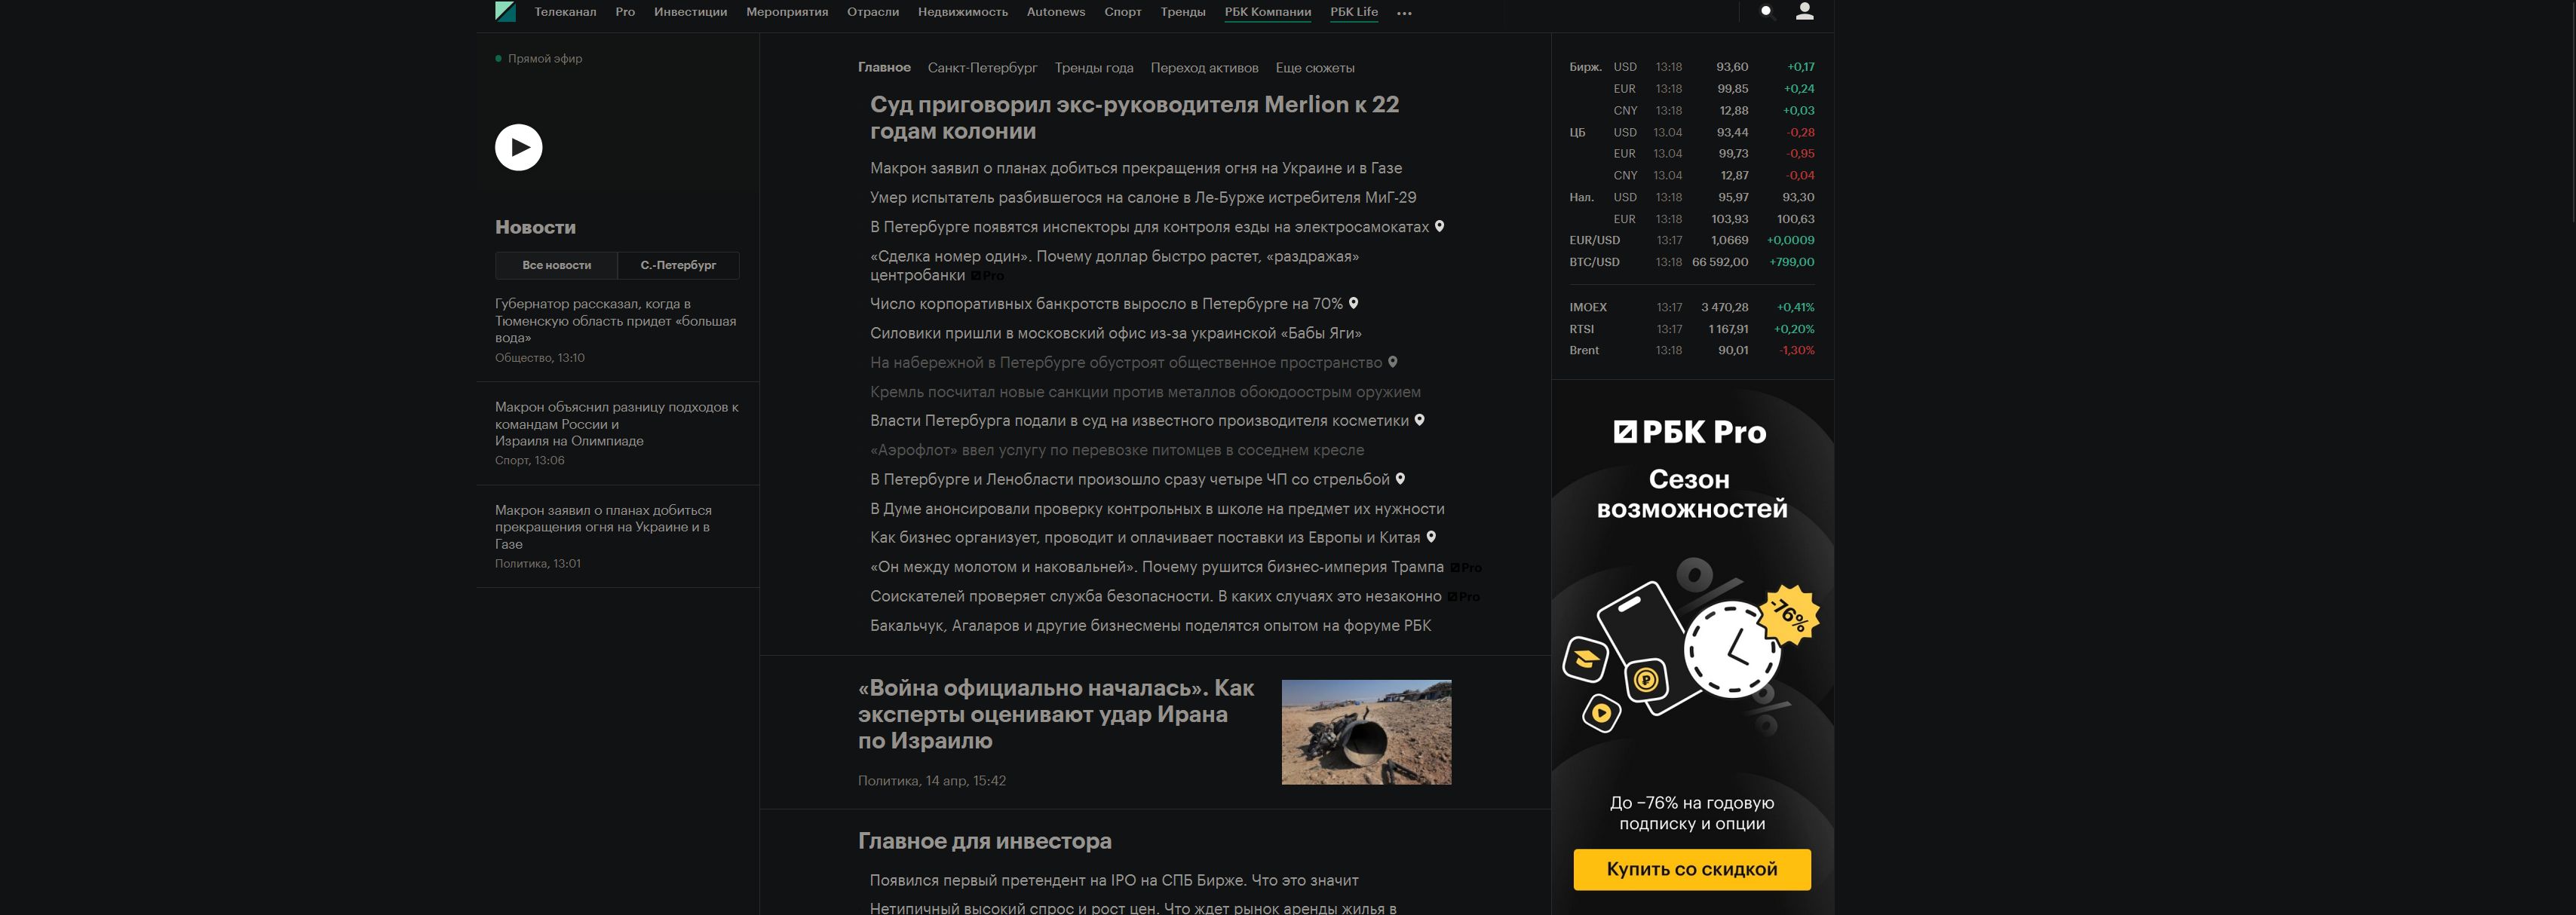 Screenshot of RBC.ru Center page